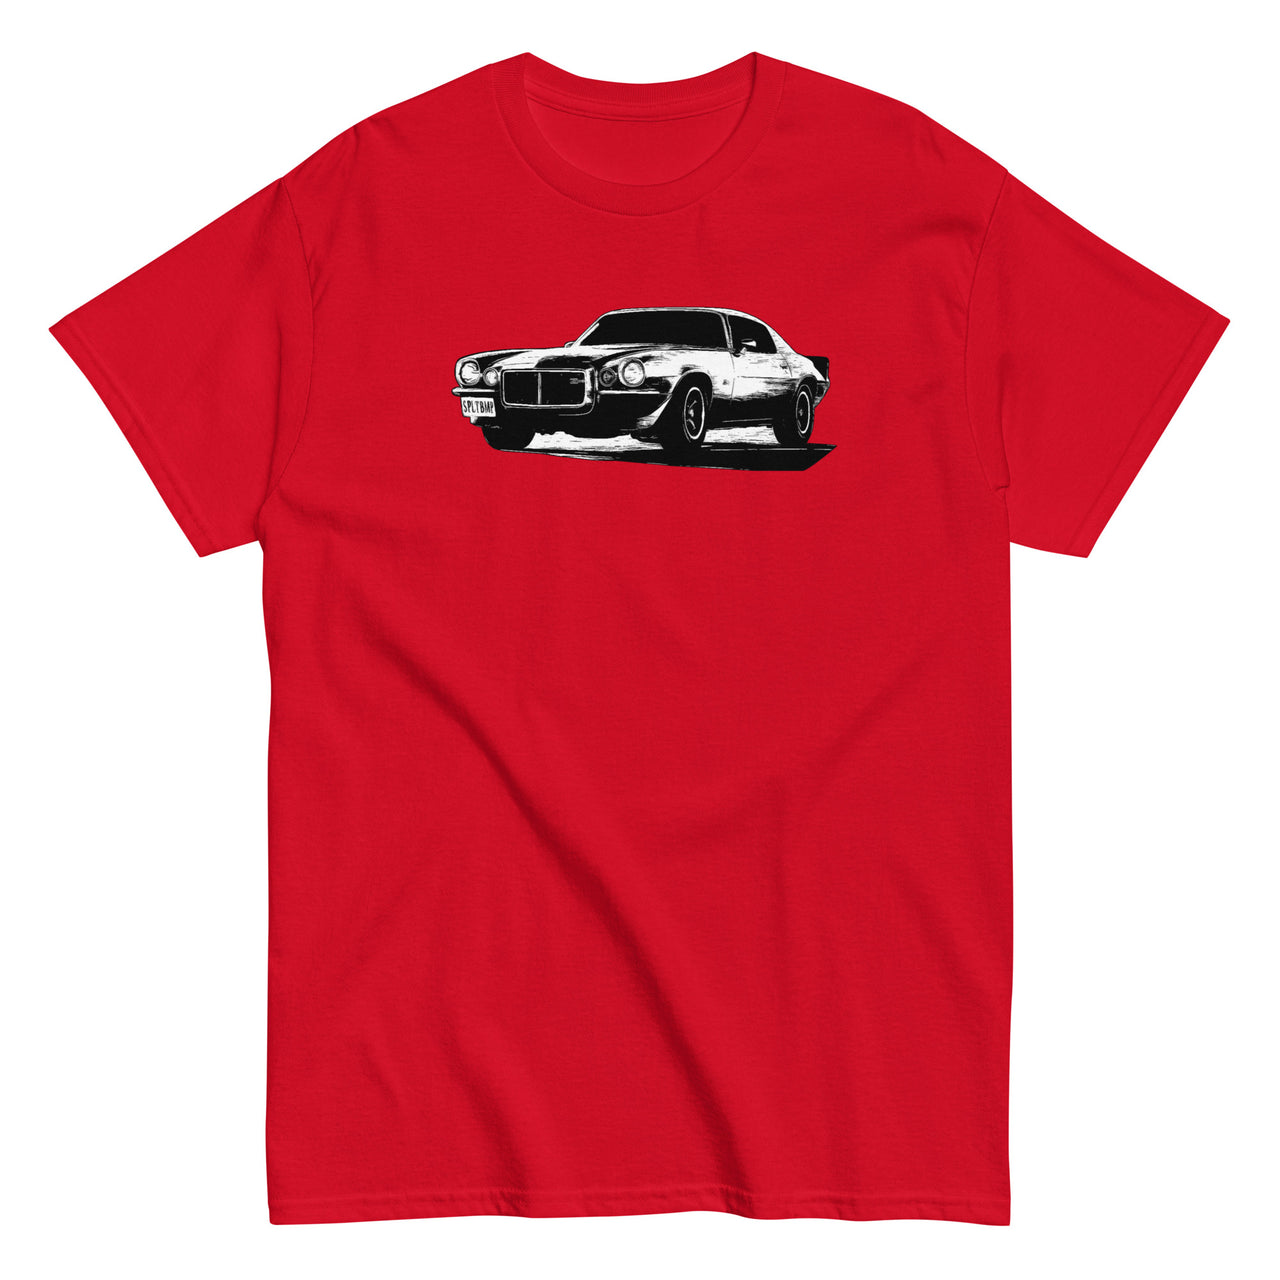 73 Camaro T-Shirt in red